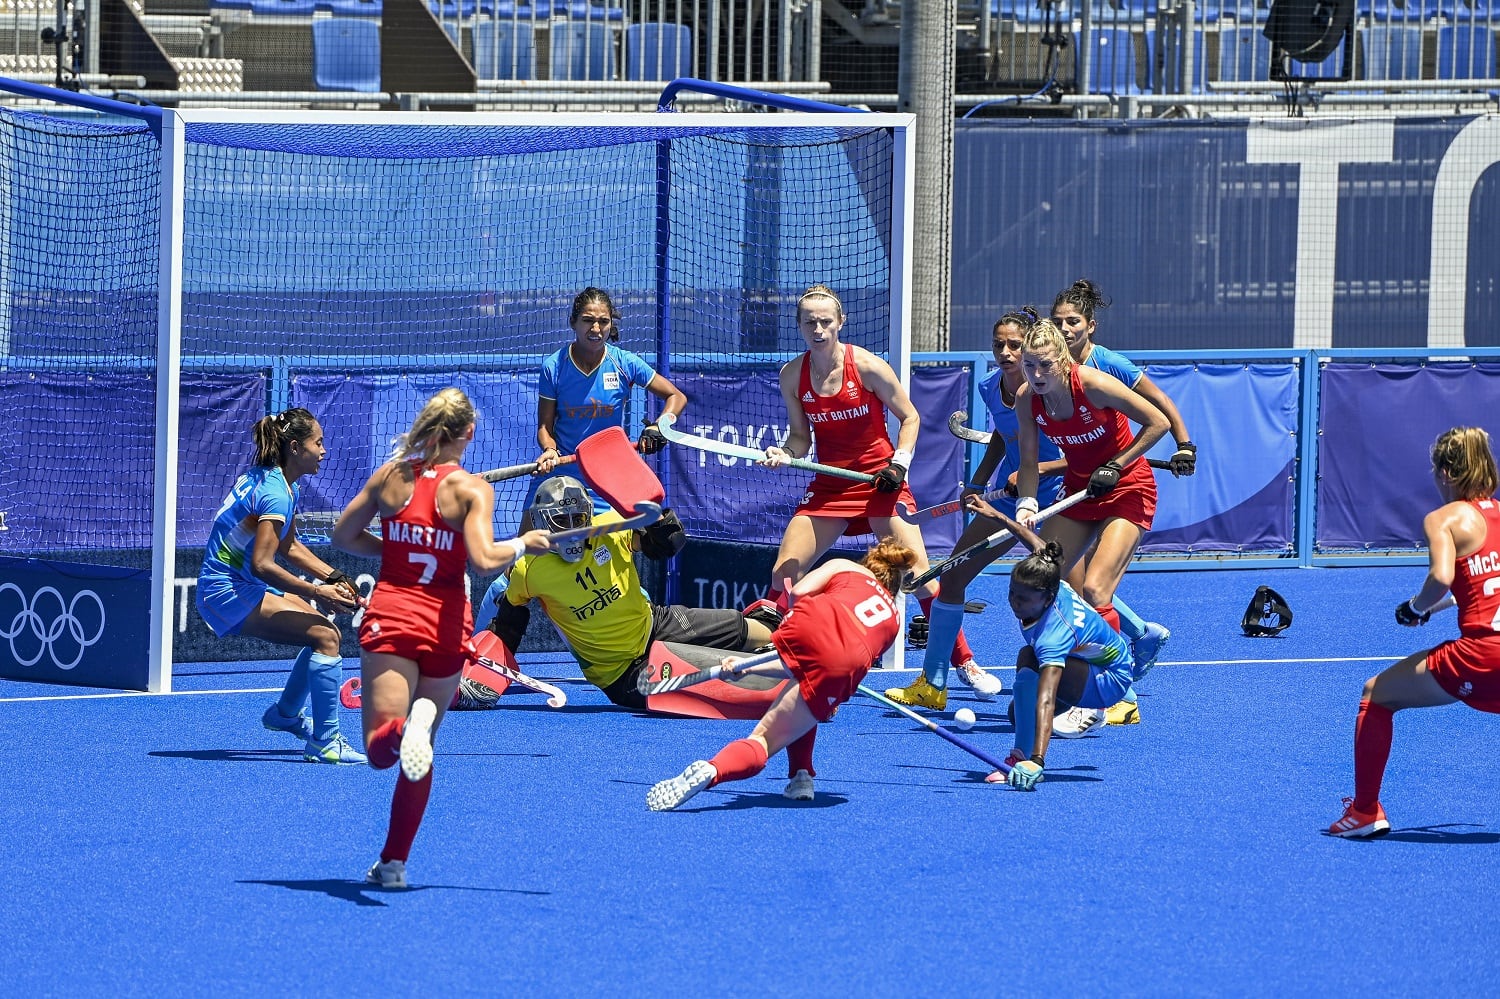 Indian goalie stands against British girls